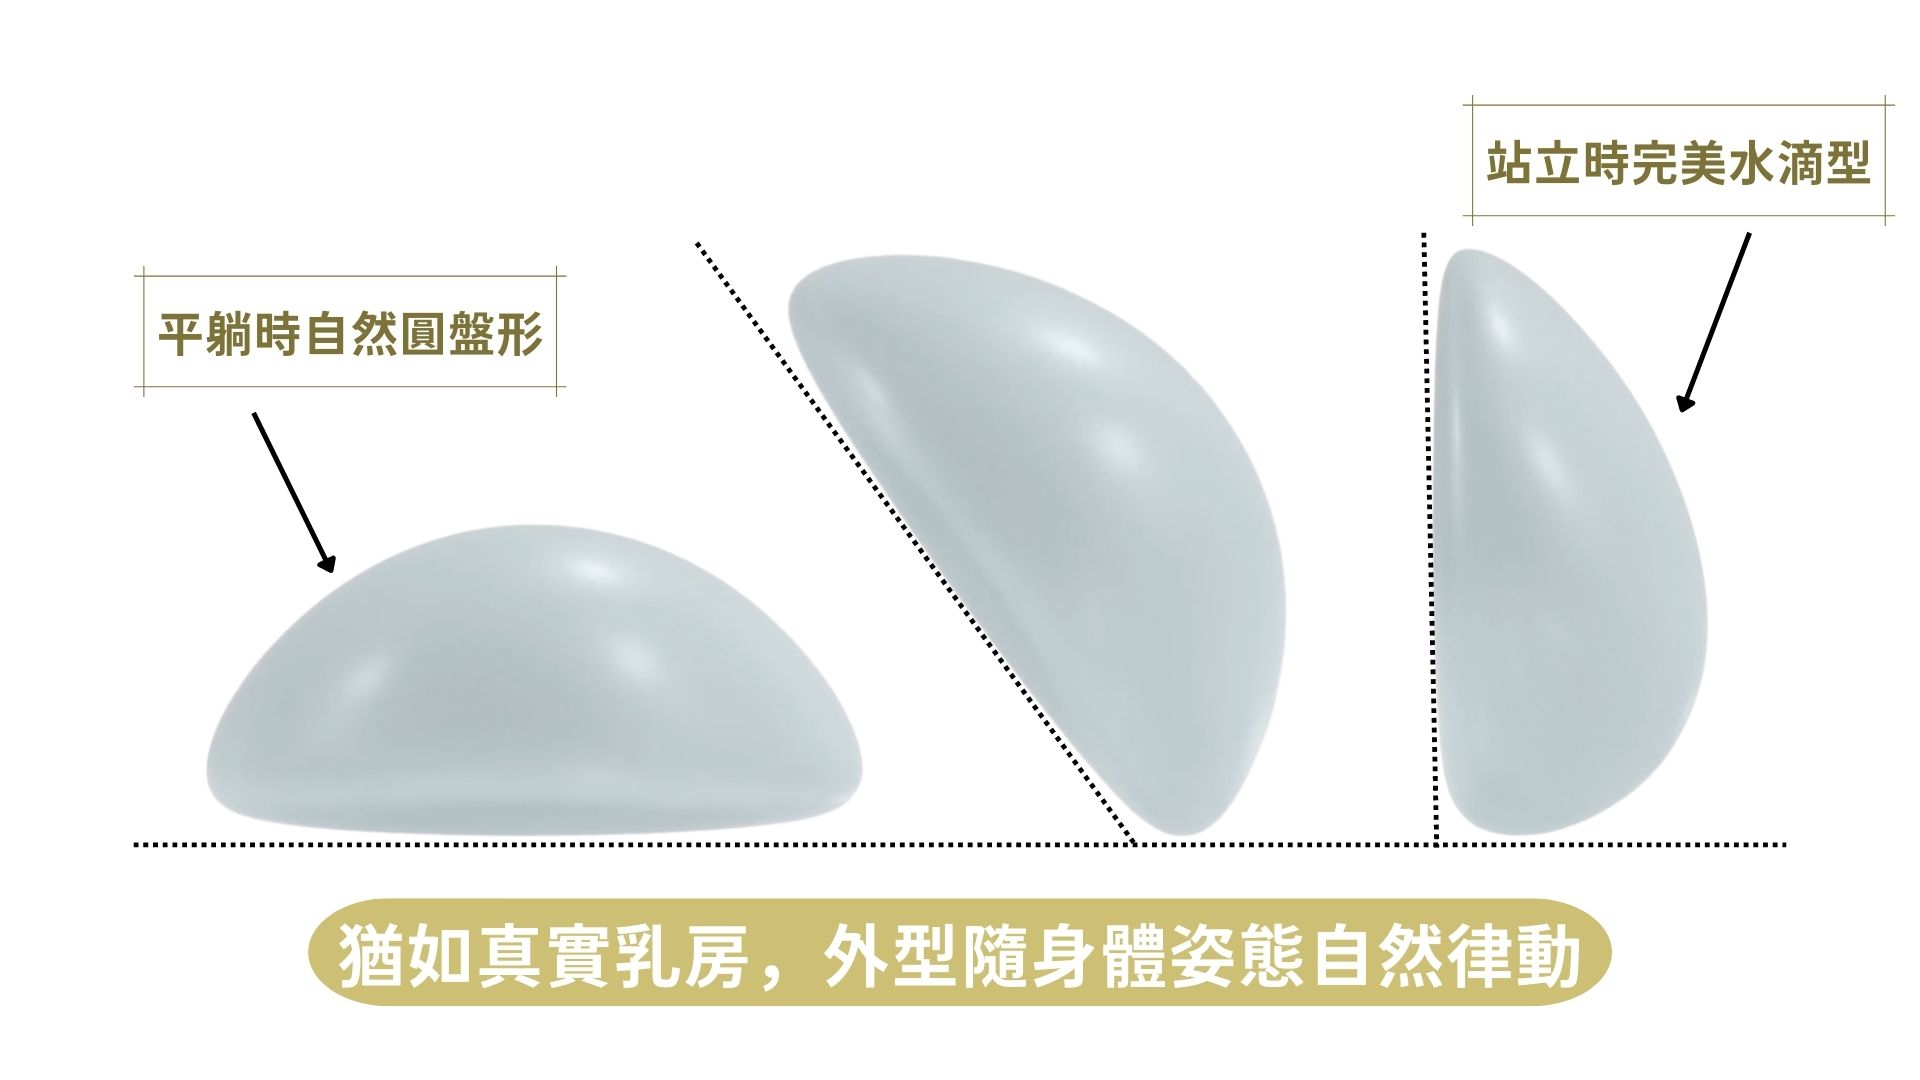 JoyMed香港提供Motiva隆胸療程，採用Motiva魔滴胸原廠正貨，假體擁有高度流動性及100%填充的特點，外觀非常自然。